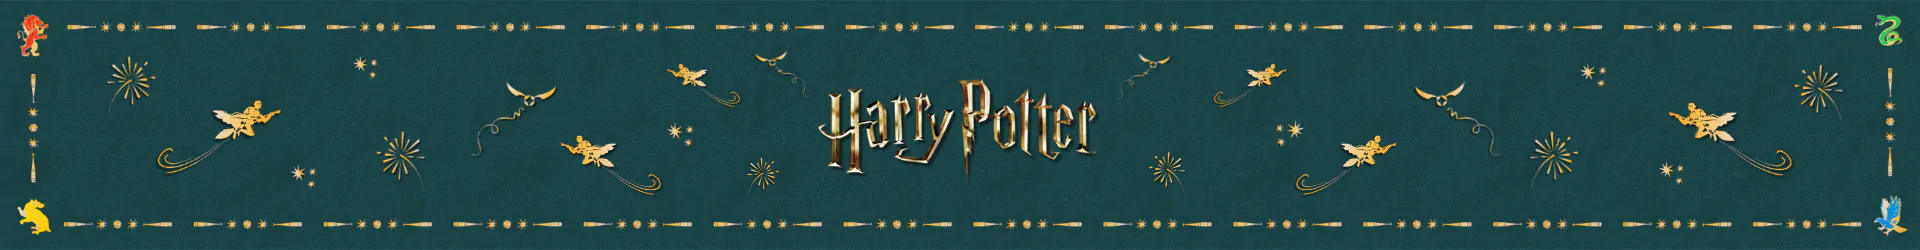 Harry Potter bags banner